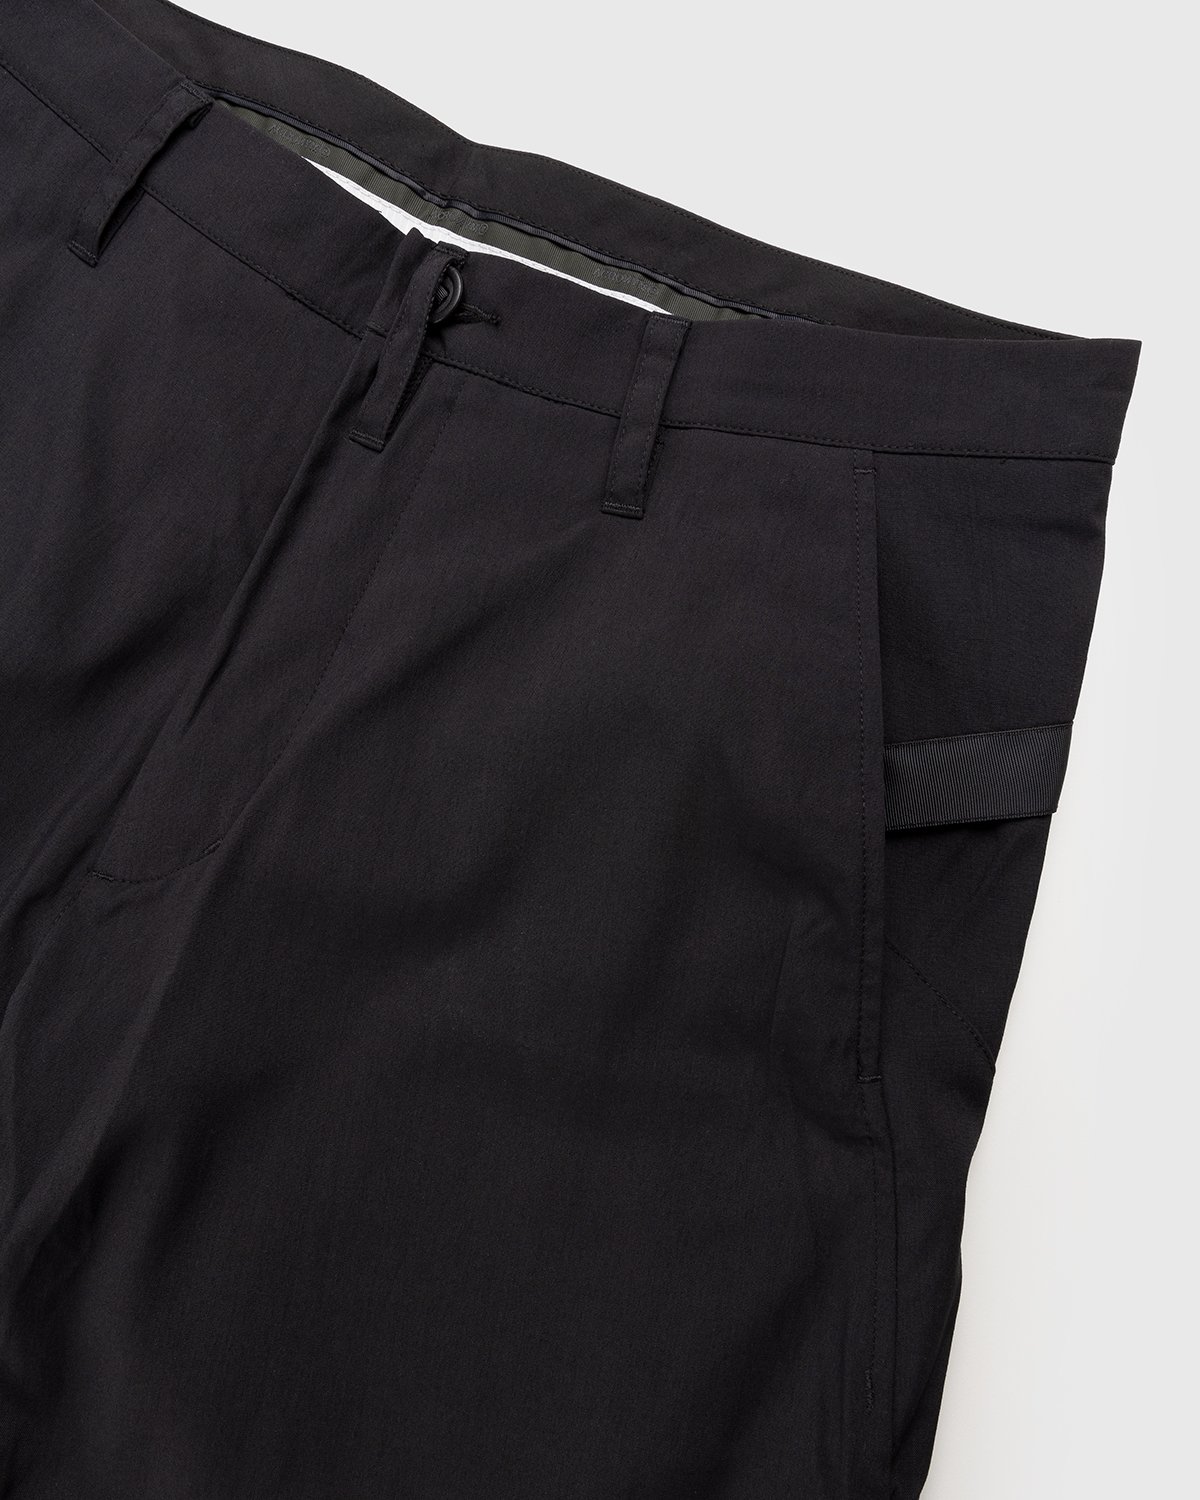 ACRONYM - P39-M Pants Black - Clothing - Black - Image 4